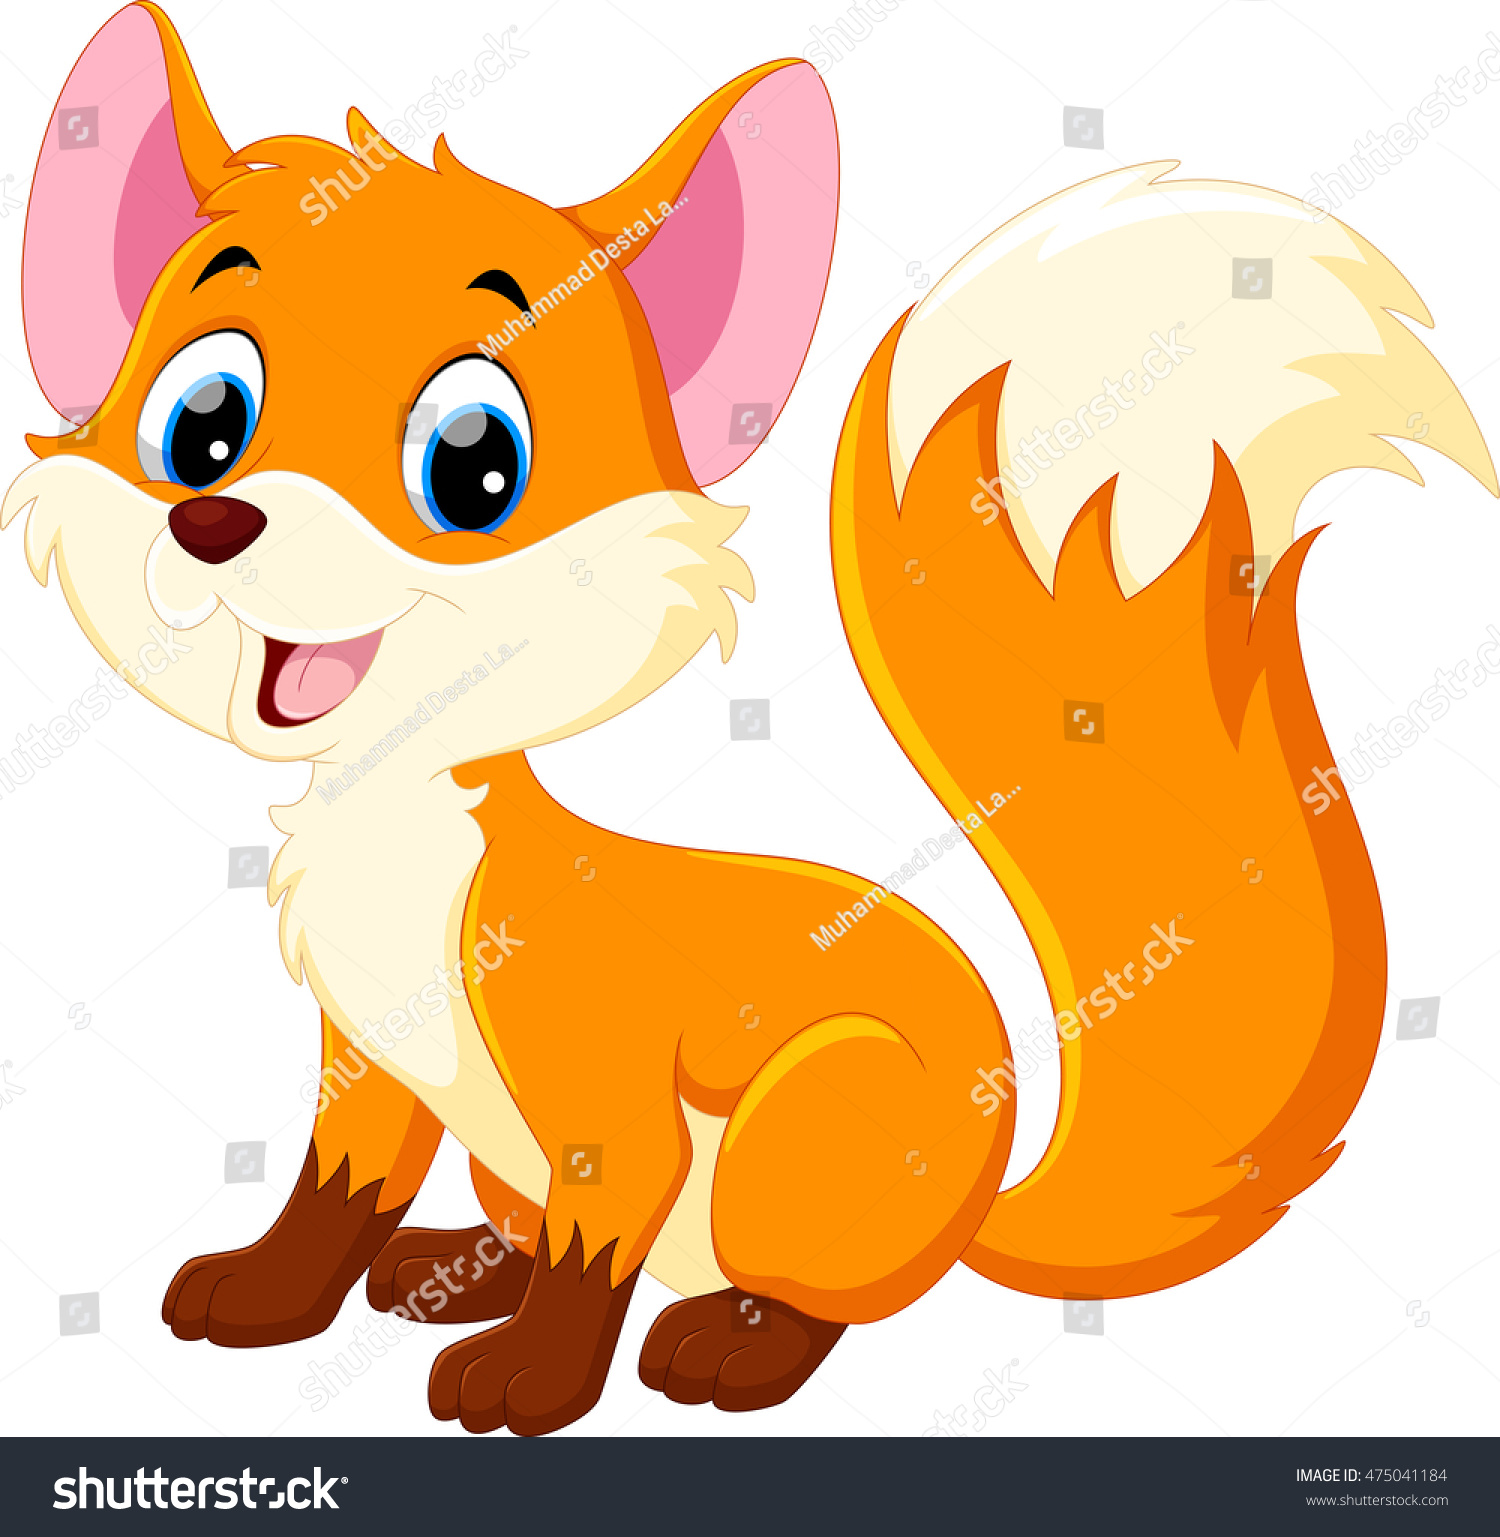 Cute Fox Cartoon Stock Vector 475041184 : Shutterstock